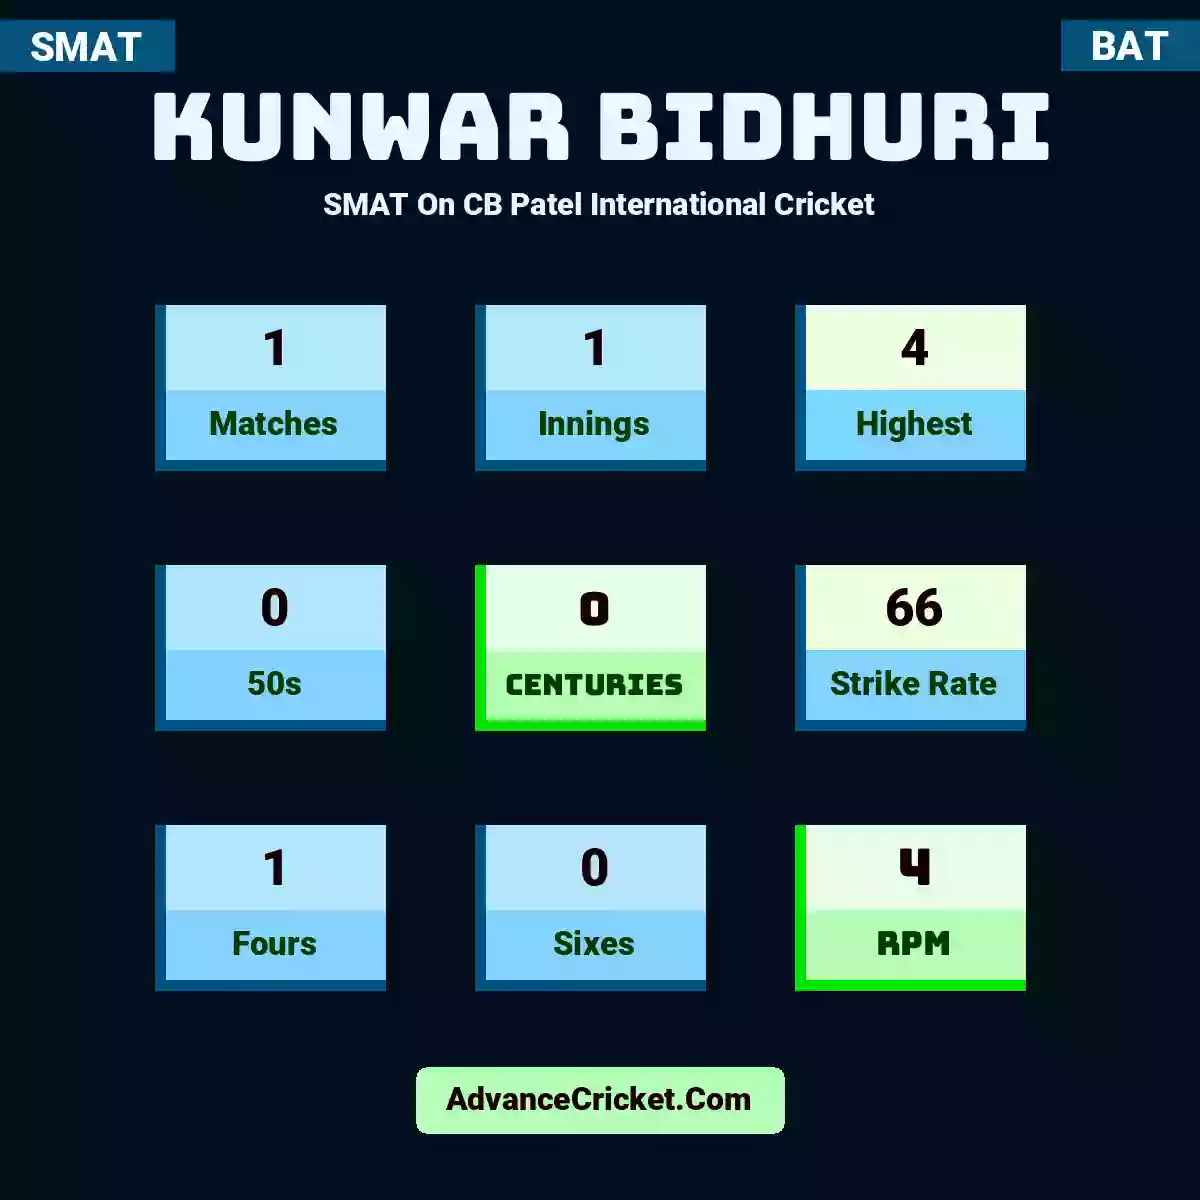 Kunwar Bidhuri SMAT  On CB Patel International Cricket, Kunwar Bidhuri played 1 matches, scored 4 runs as highest, 0 half-centuries, and 0 centuries, with a strike rate of 66. K.Bidhuri hit 1 fours and 0 sixes, with an RPM of 4.